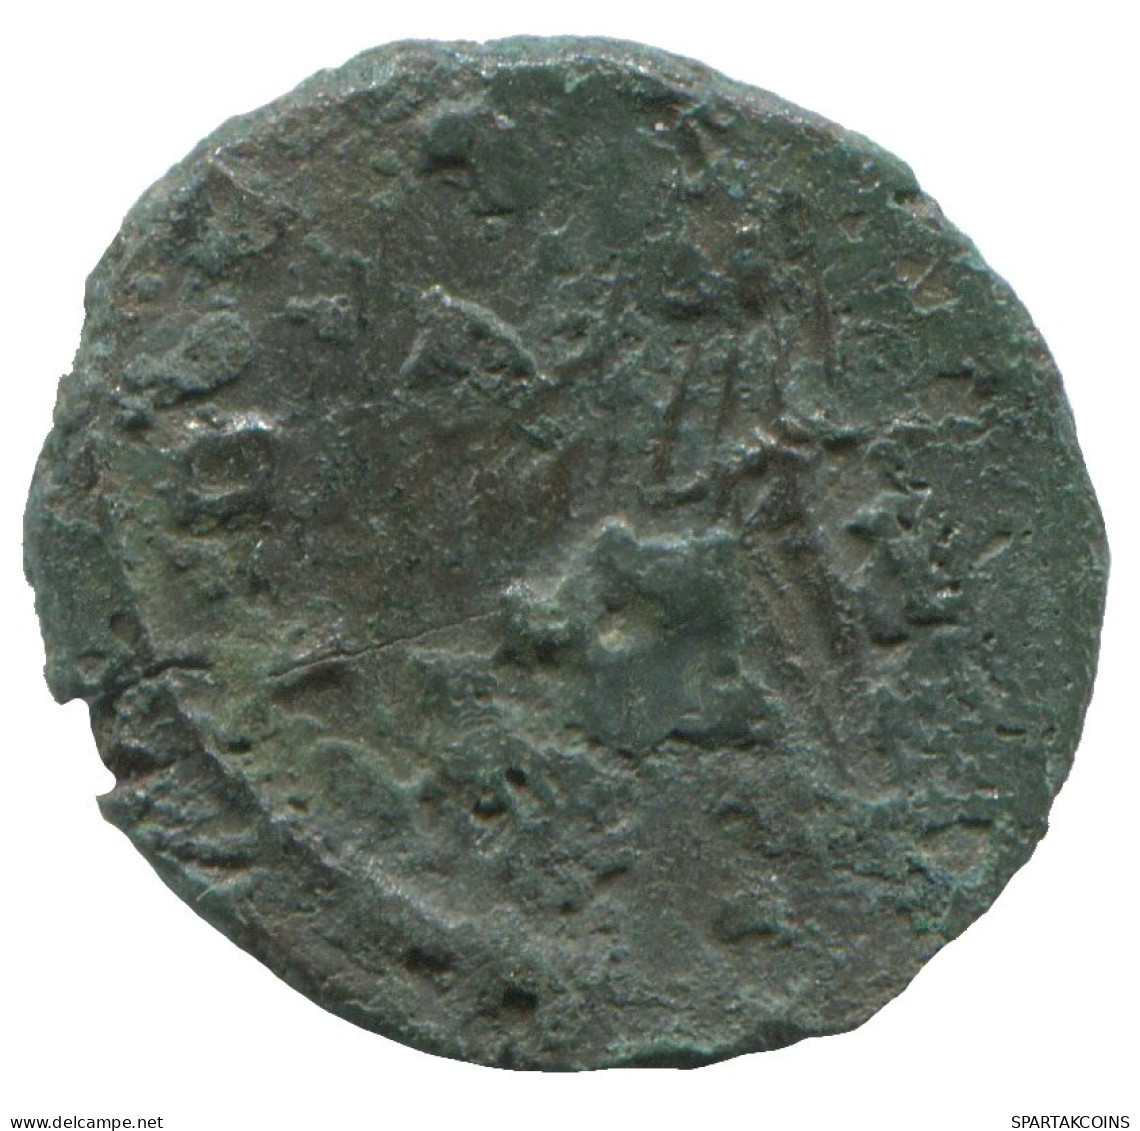 GALLIENUS ROMAN IMPERIO Follis Antiguo Moneda 2g/17mm #SAV1181.9.E.A - La Crisi Militare (235 / 284)